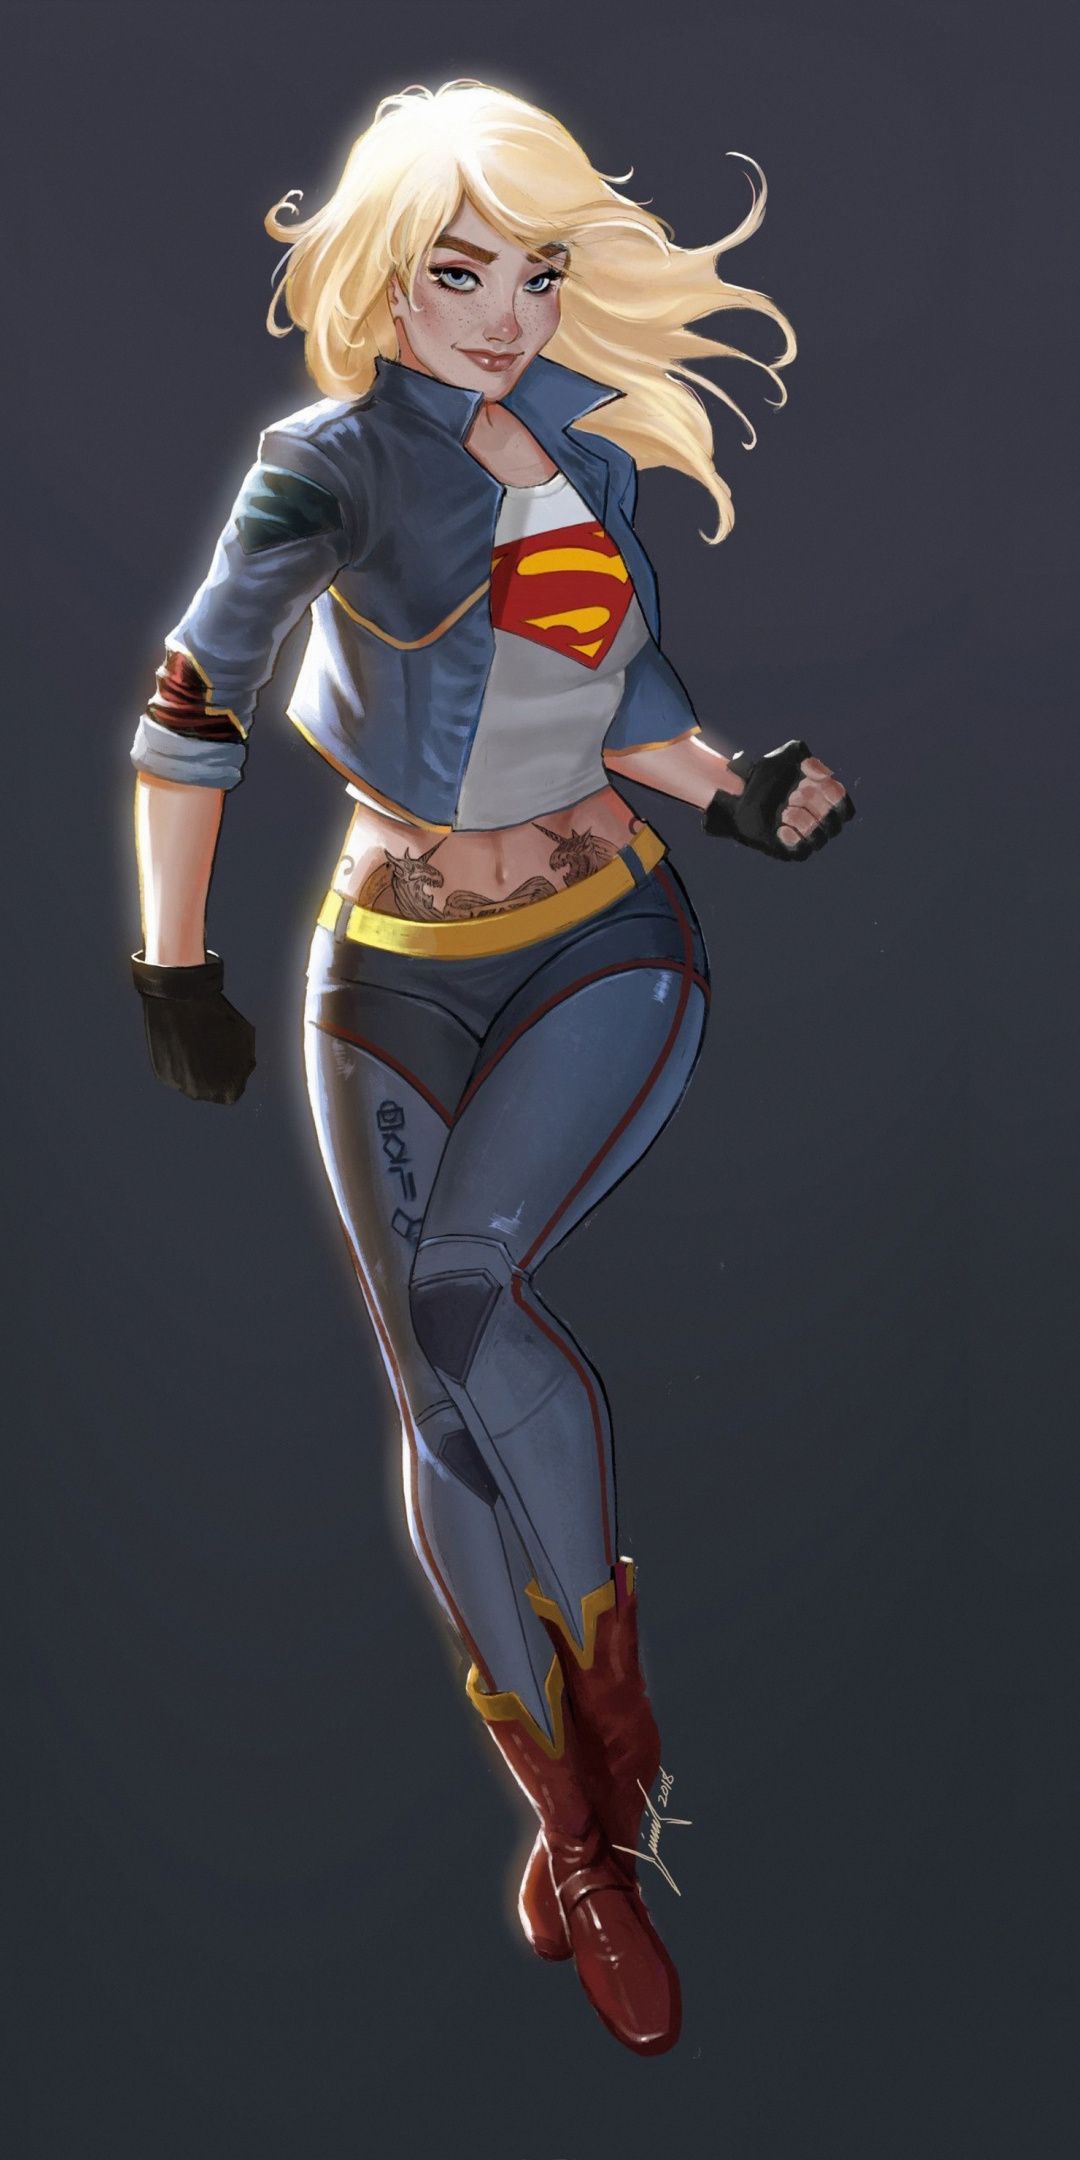 Supergirl Art Wallpapers